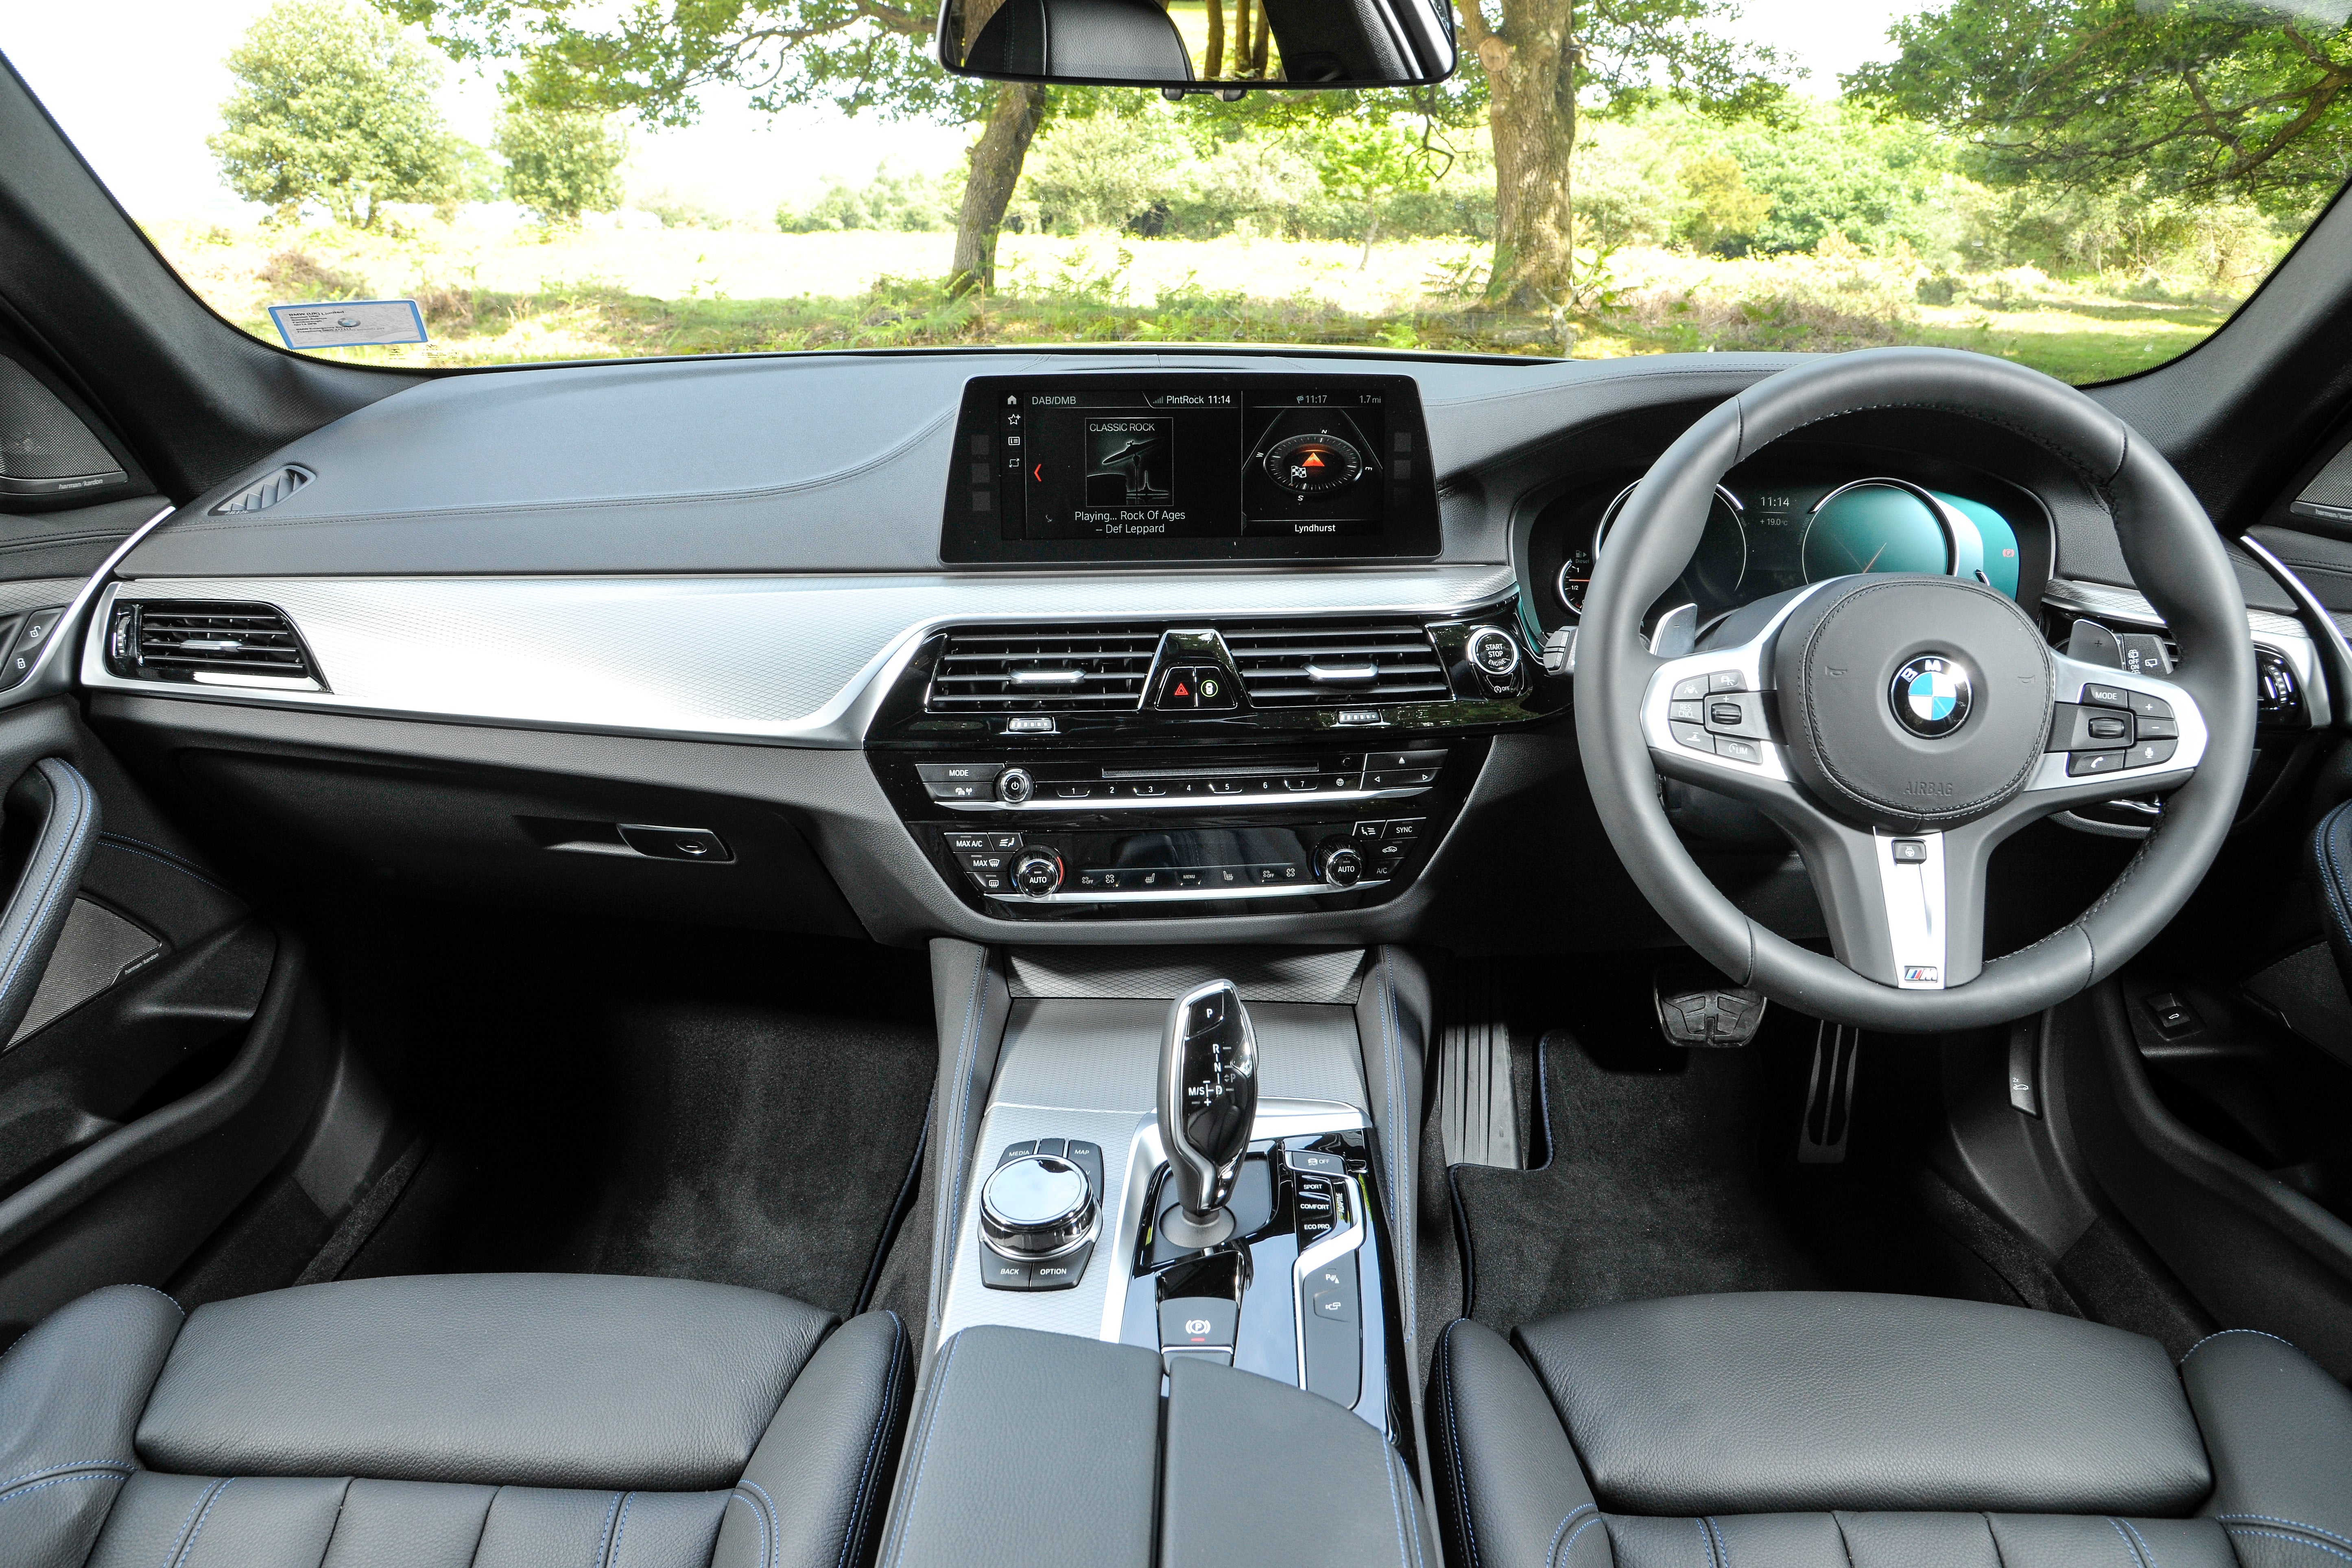 BMW 5 Series Touring Interior 